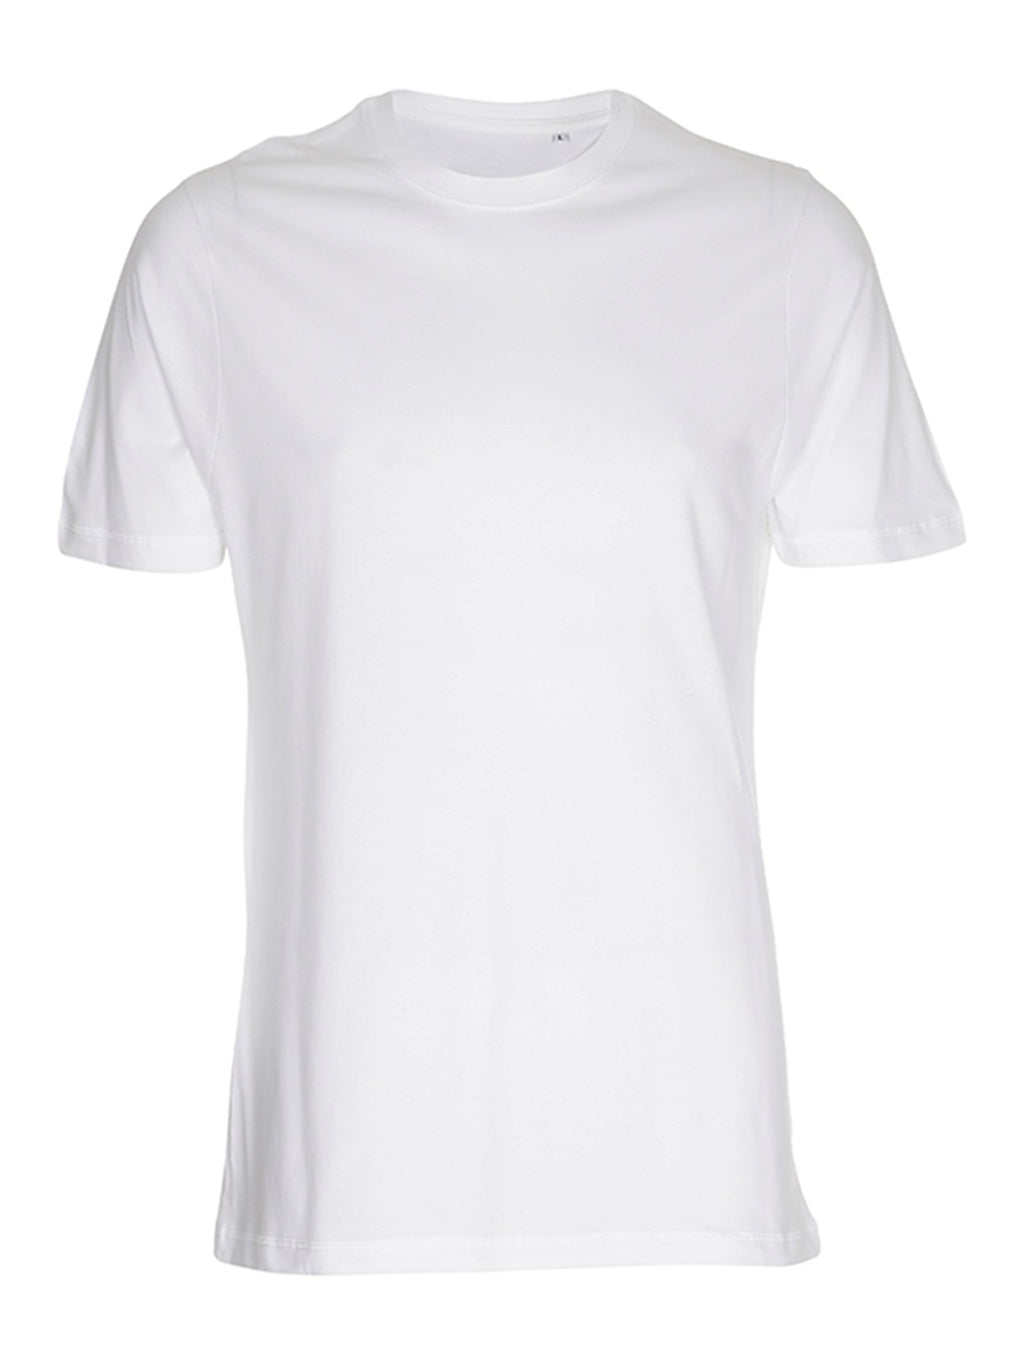 Camiseta básica orgánica - blanco